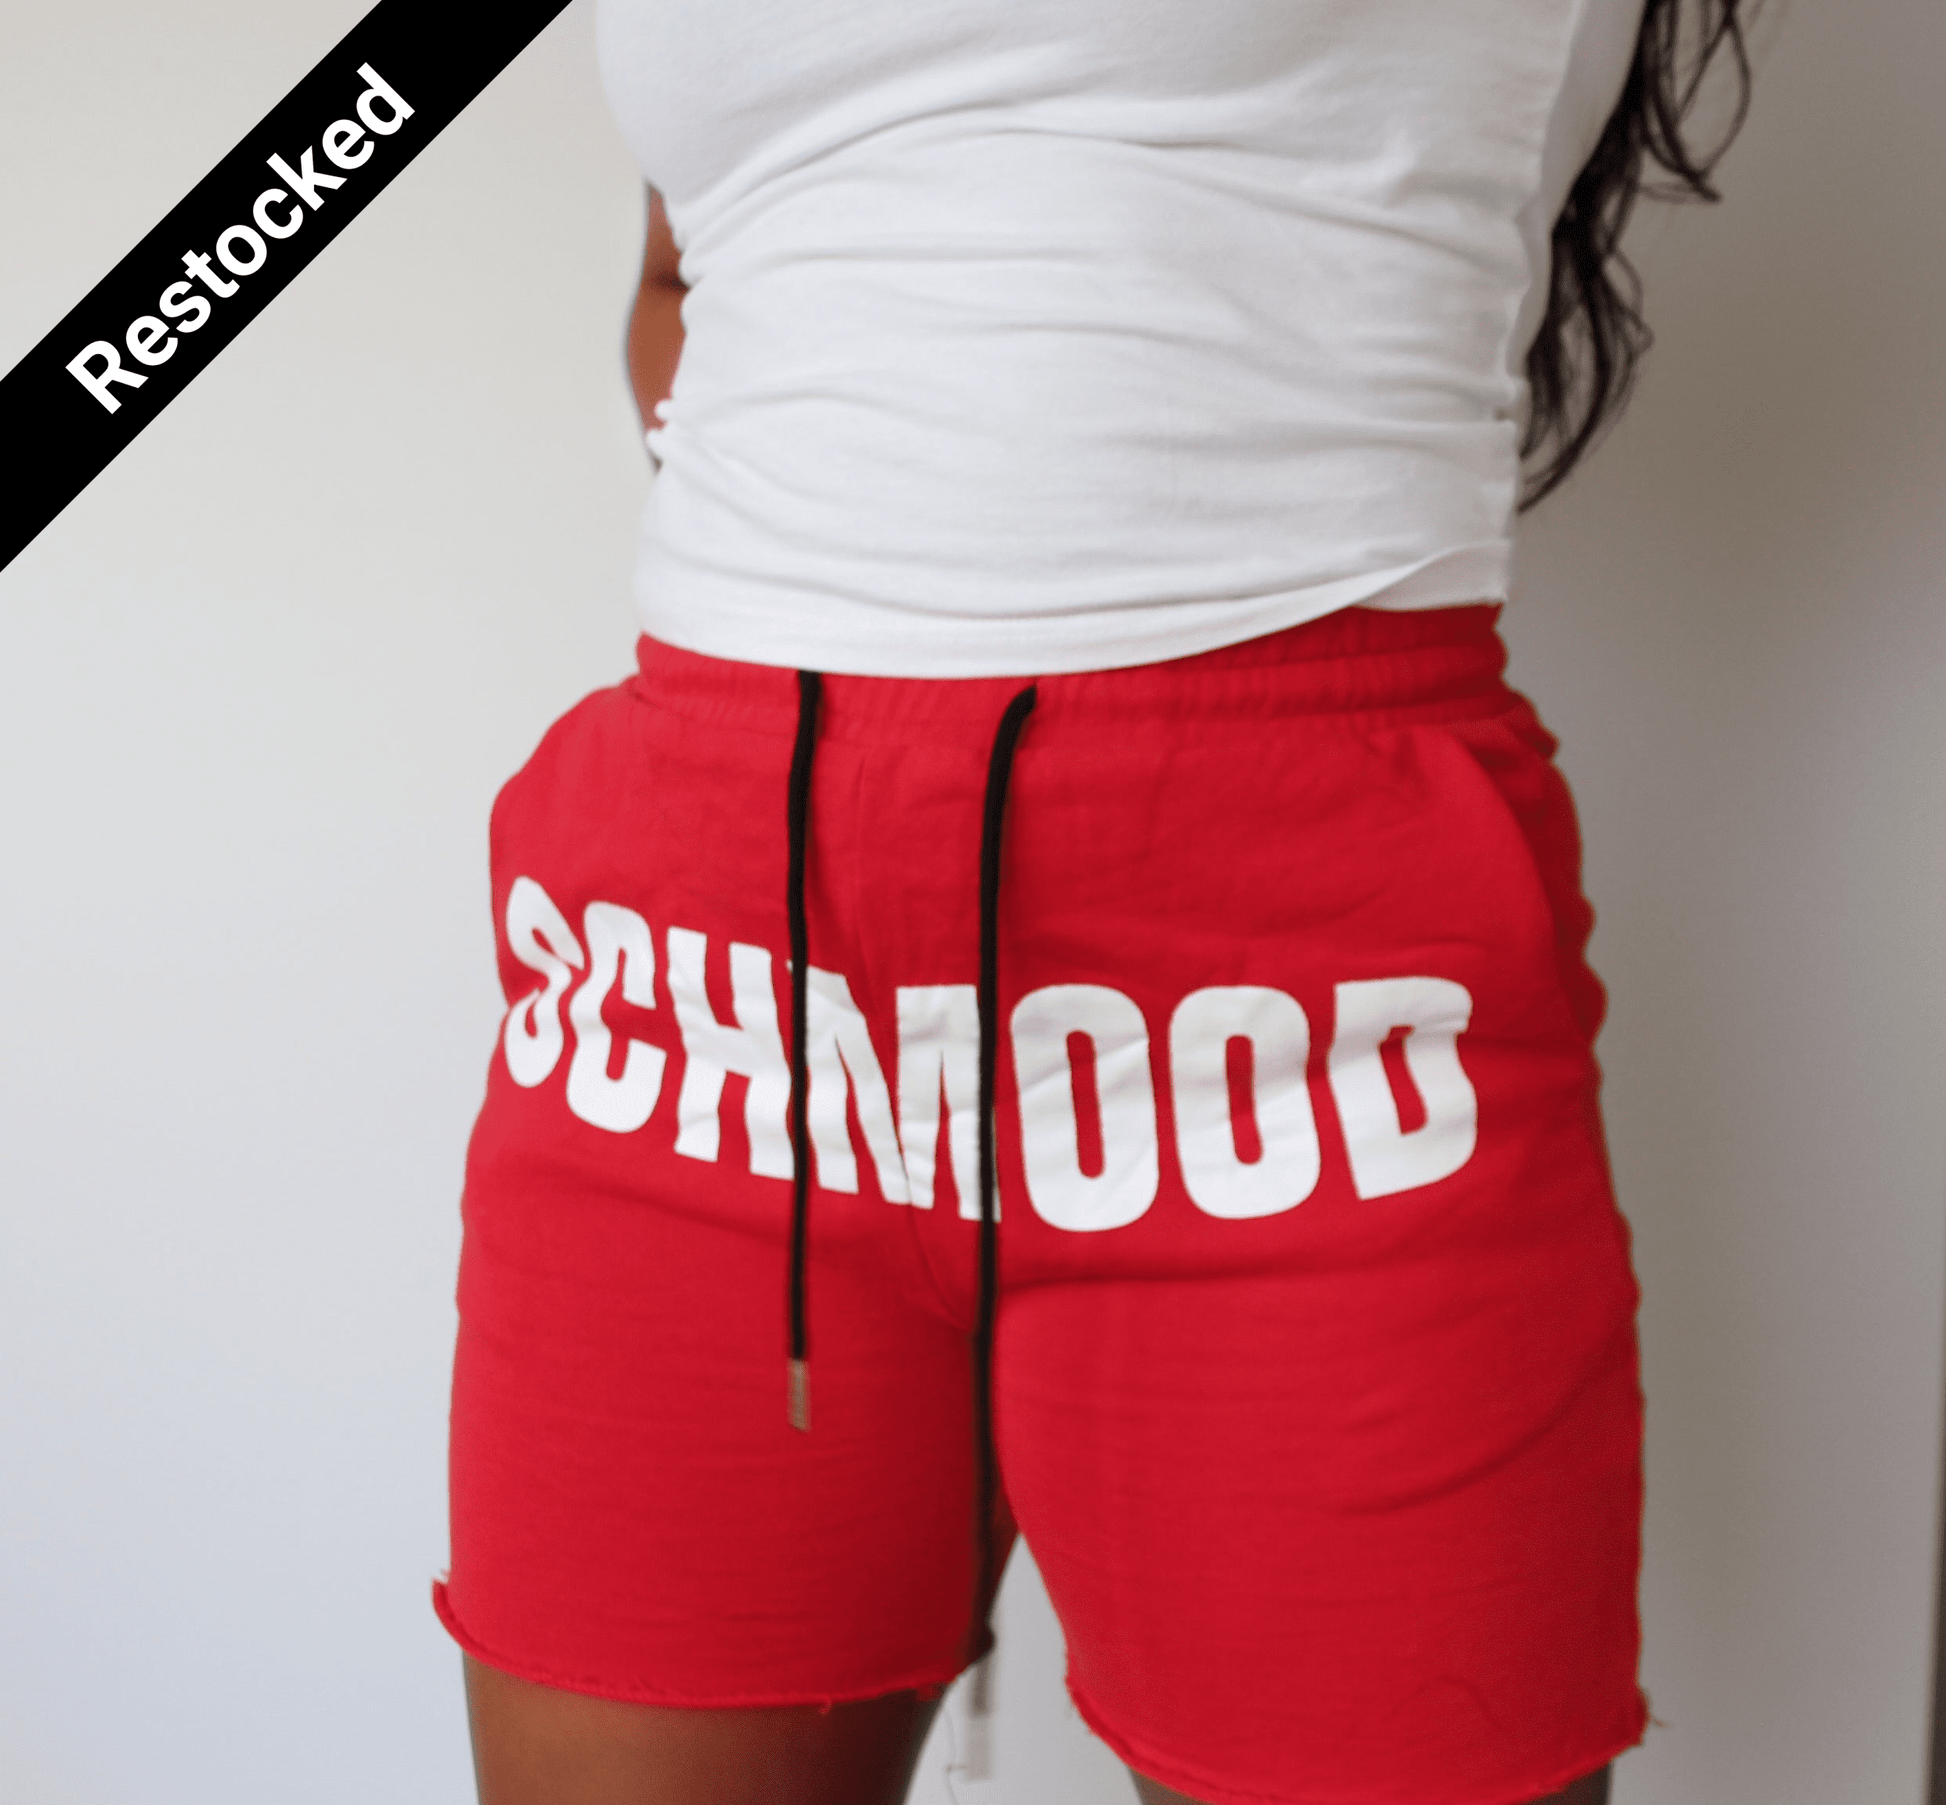 SCHMOOD Sweat Shorts - Red/White